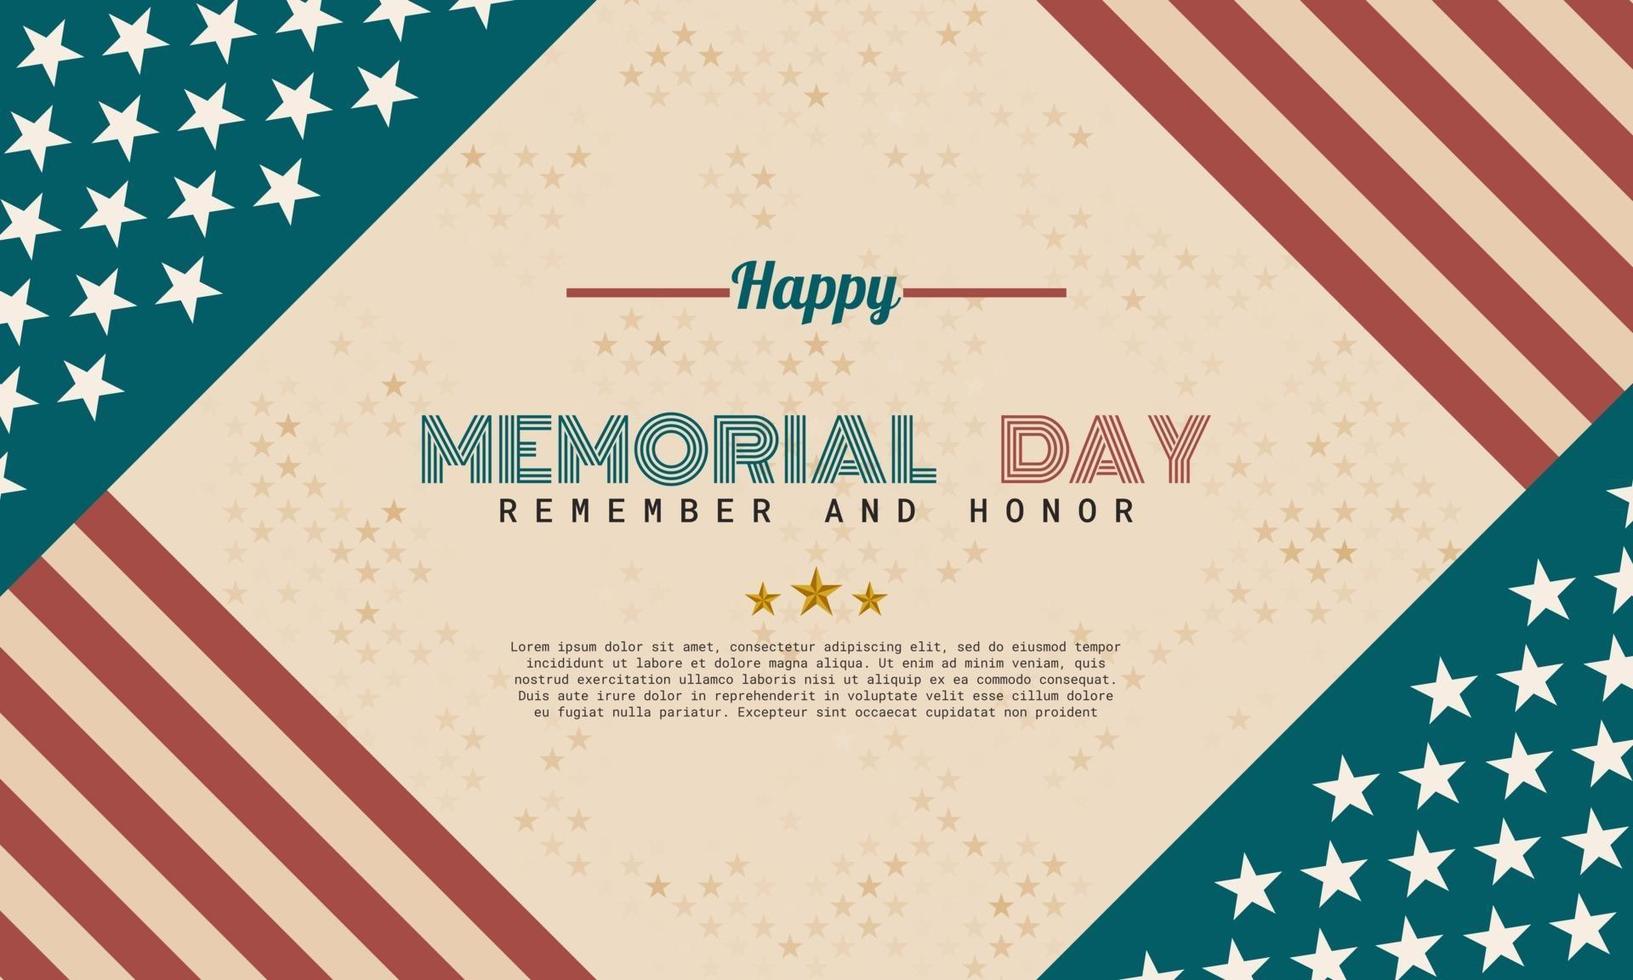 Retro style Memorial Day background template design vector